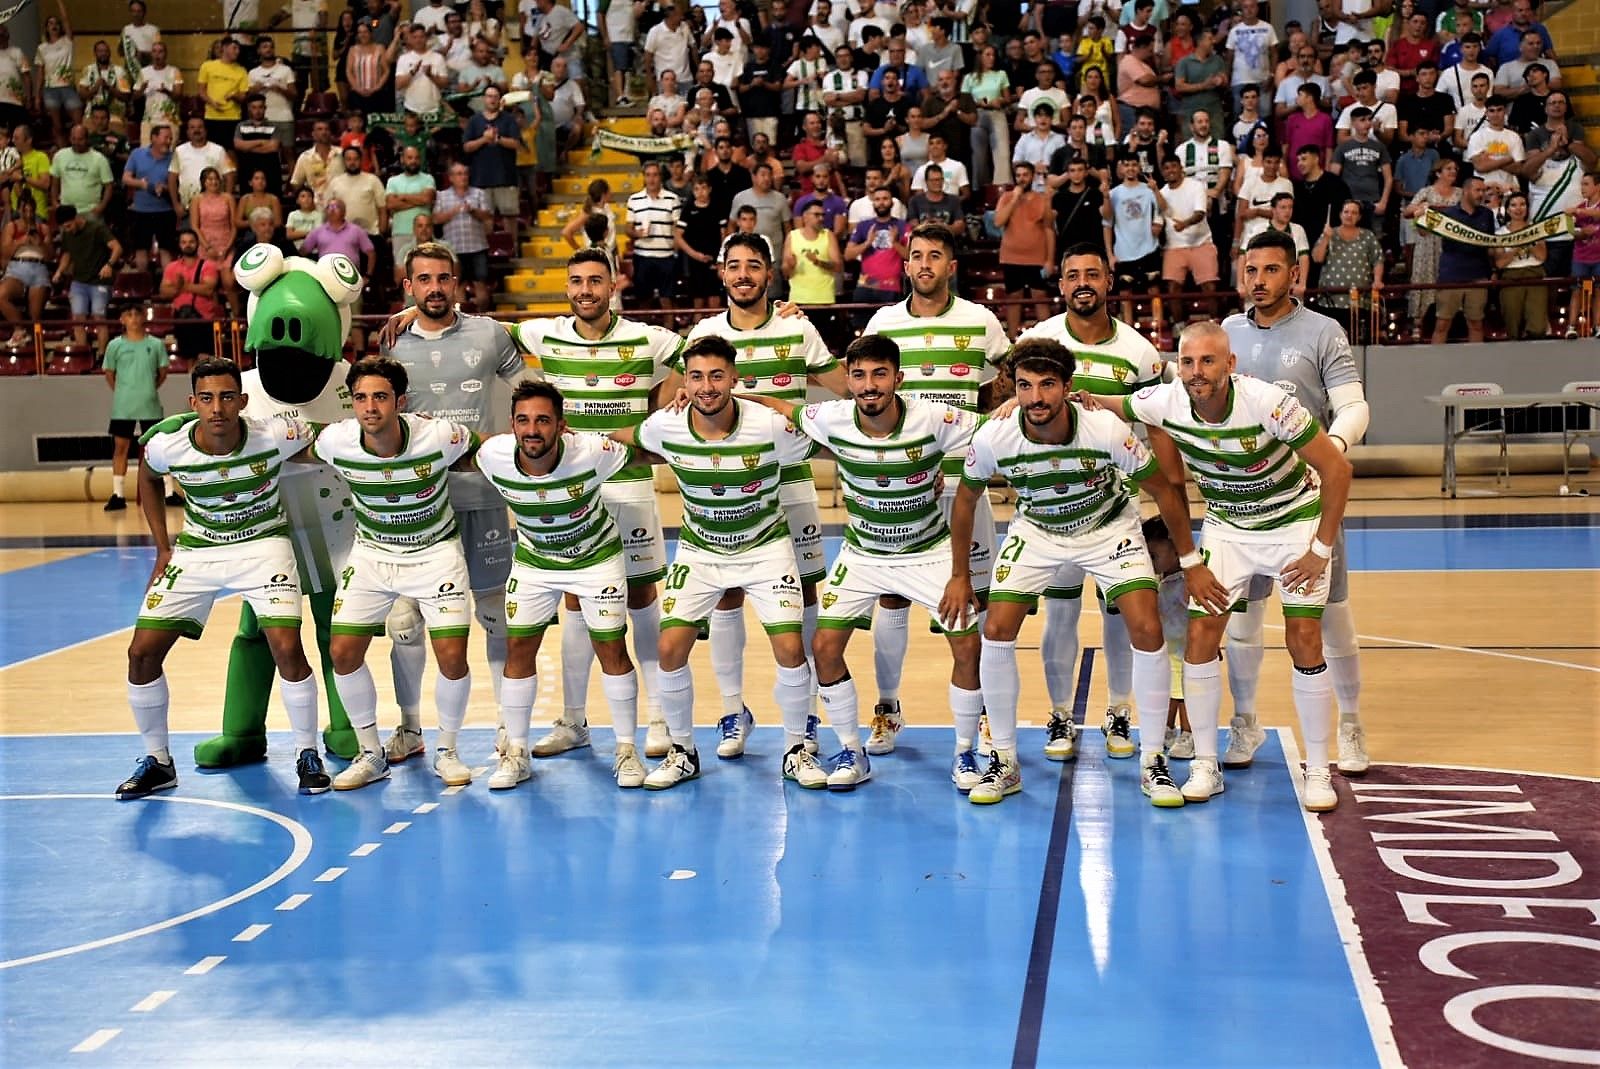 Las imágenes del Córdoba Futsal-El Pozo Murcia